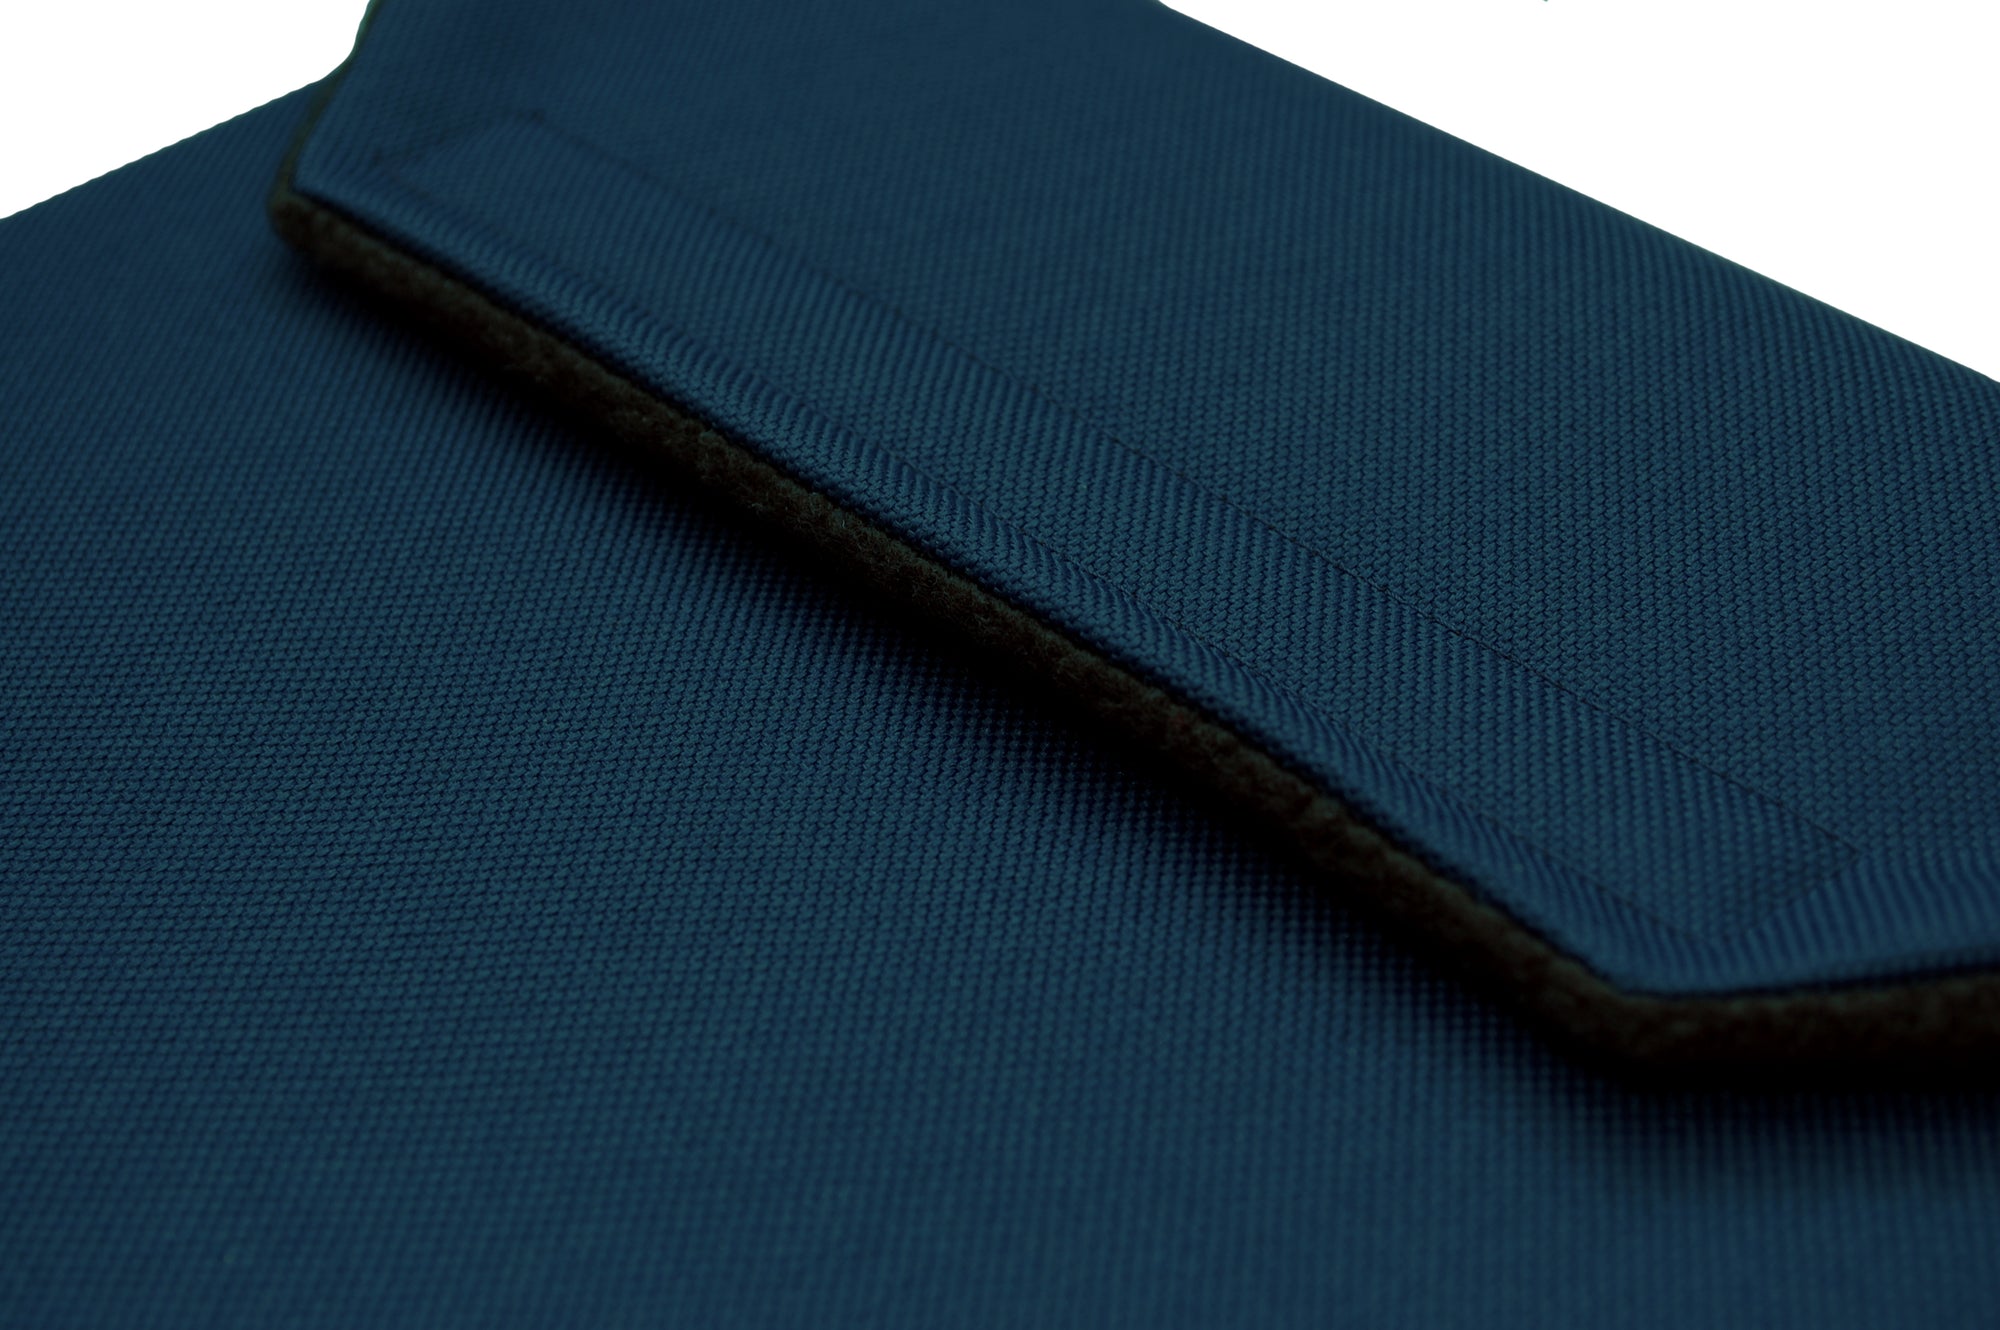 Lenovo ThinkPad X1 Yoga Sleeve Case - Everyday Canvas